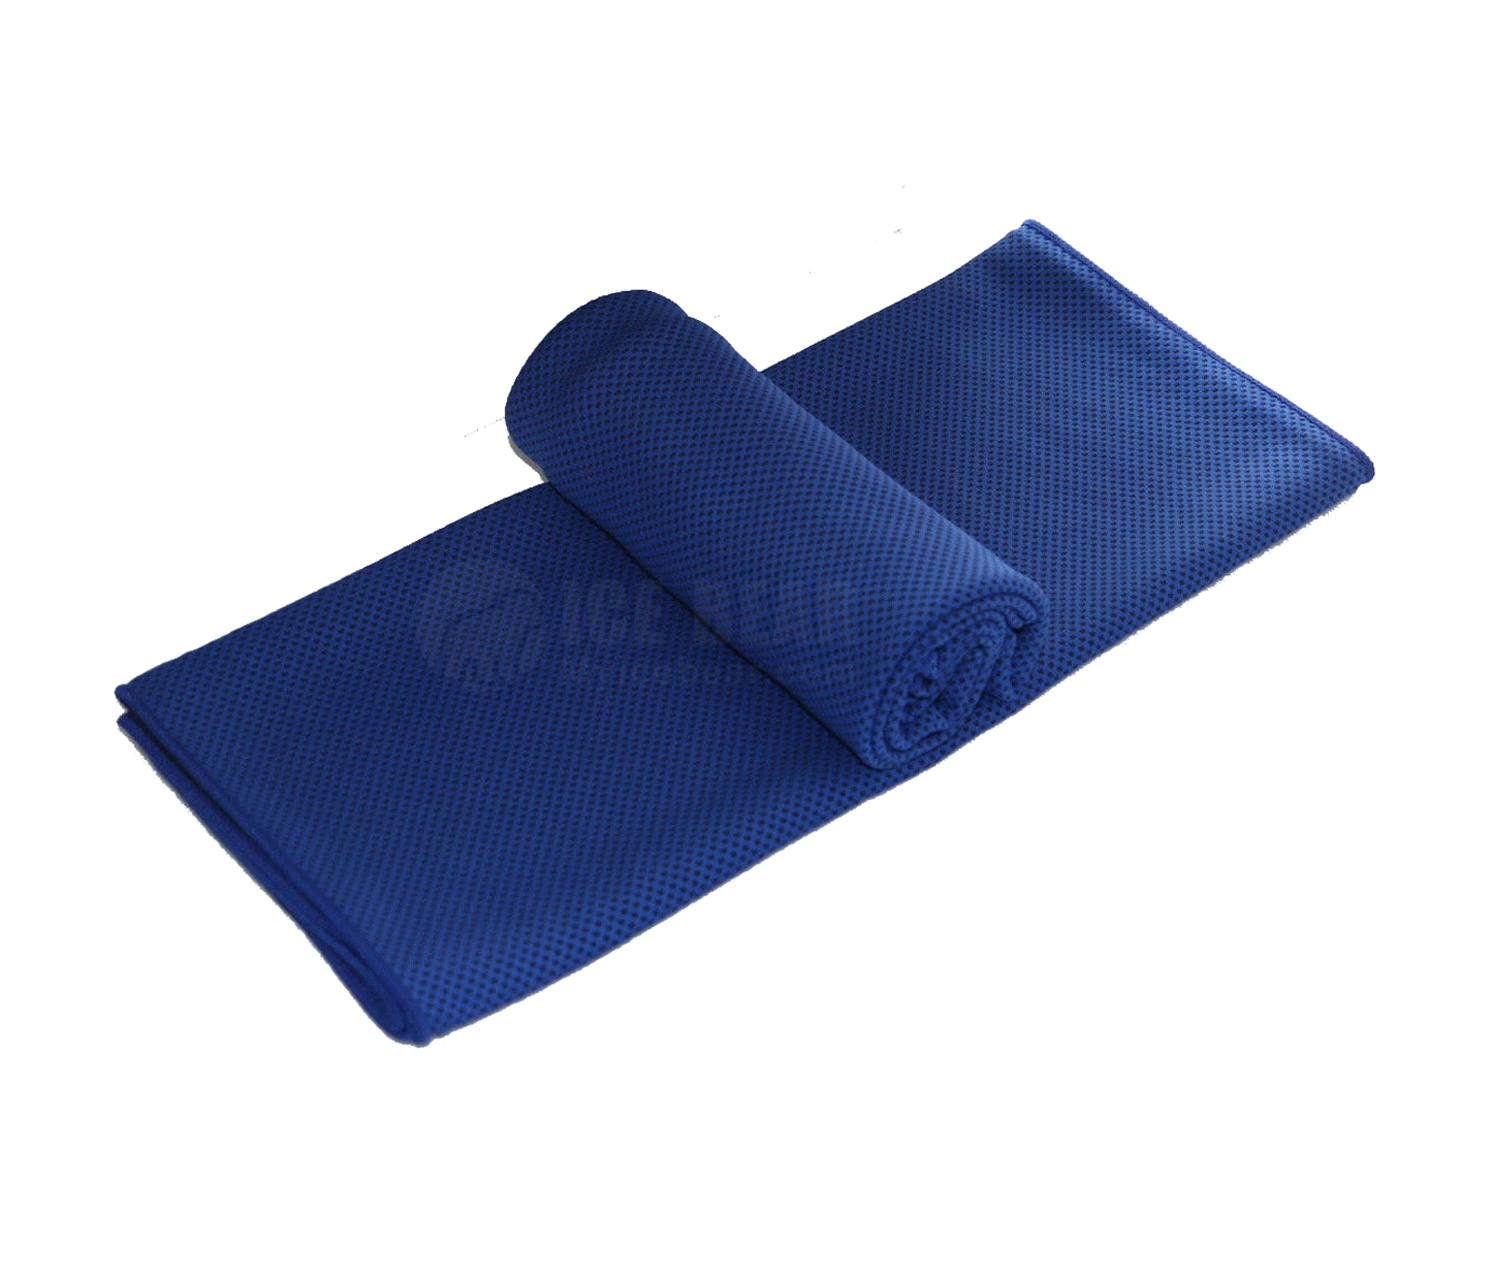 ICE-IT02-01   Dark blue Ice towel